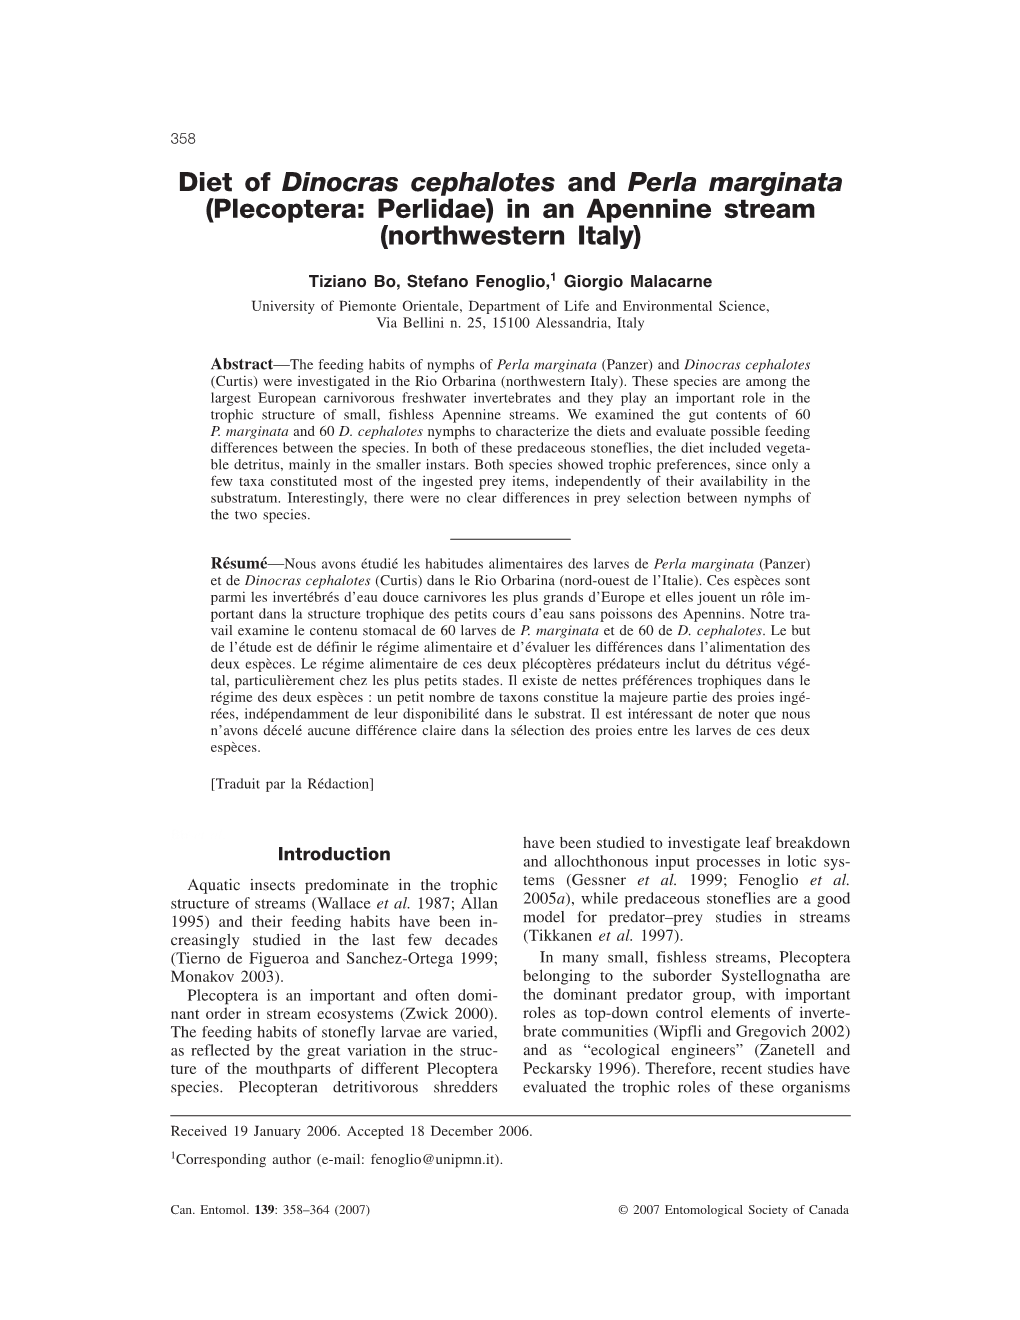 Diet of Dinocras Cephalotes and Perla Marginata (Plecoptera: Perlidae) in an Apennine Stream (Northwestern Italy)